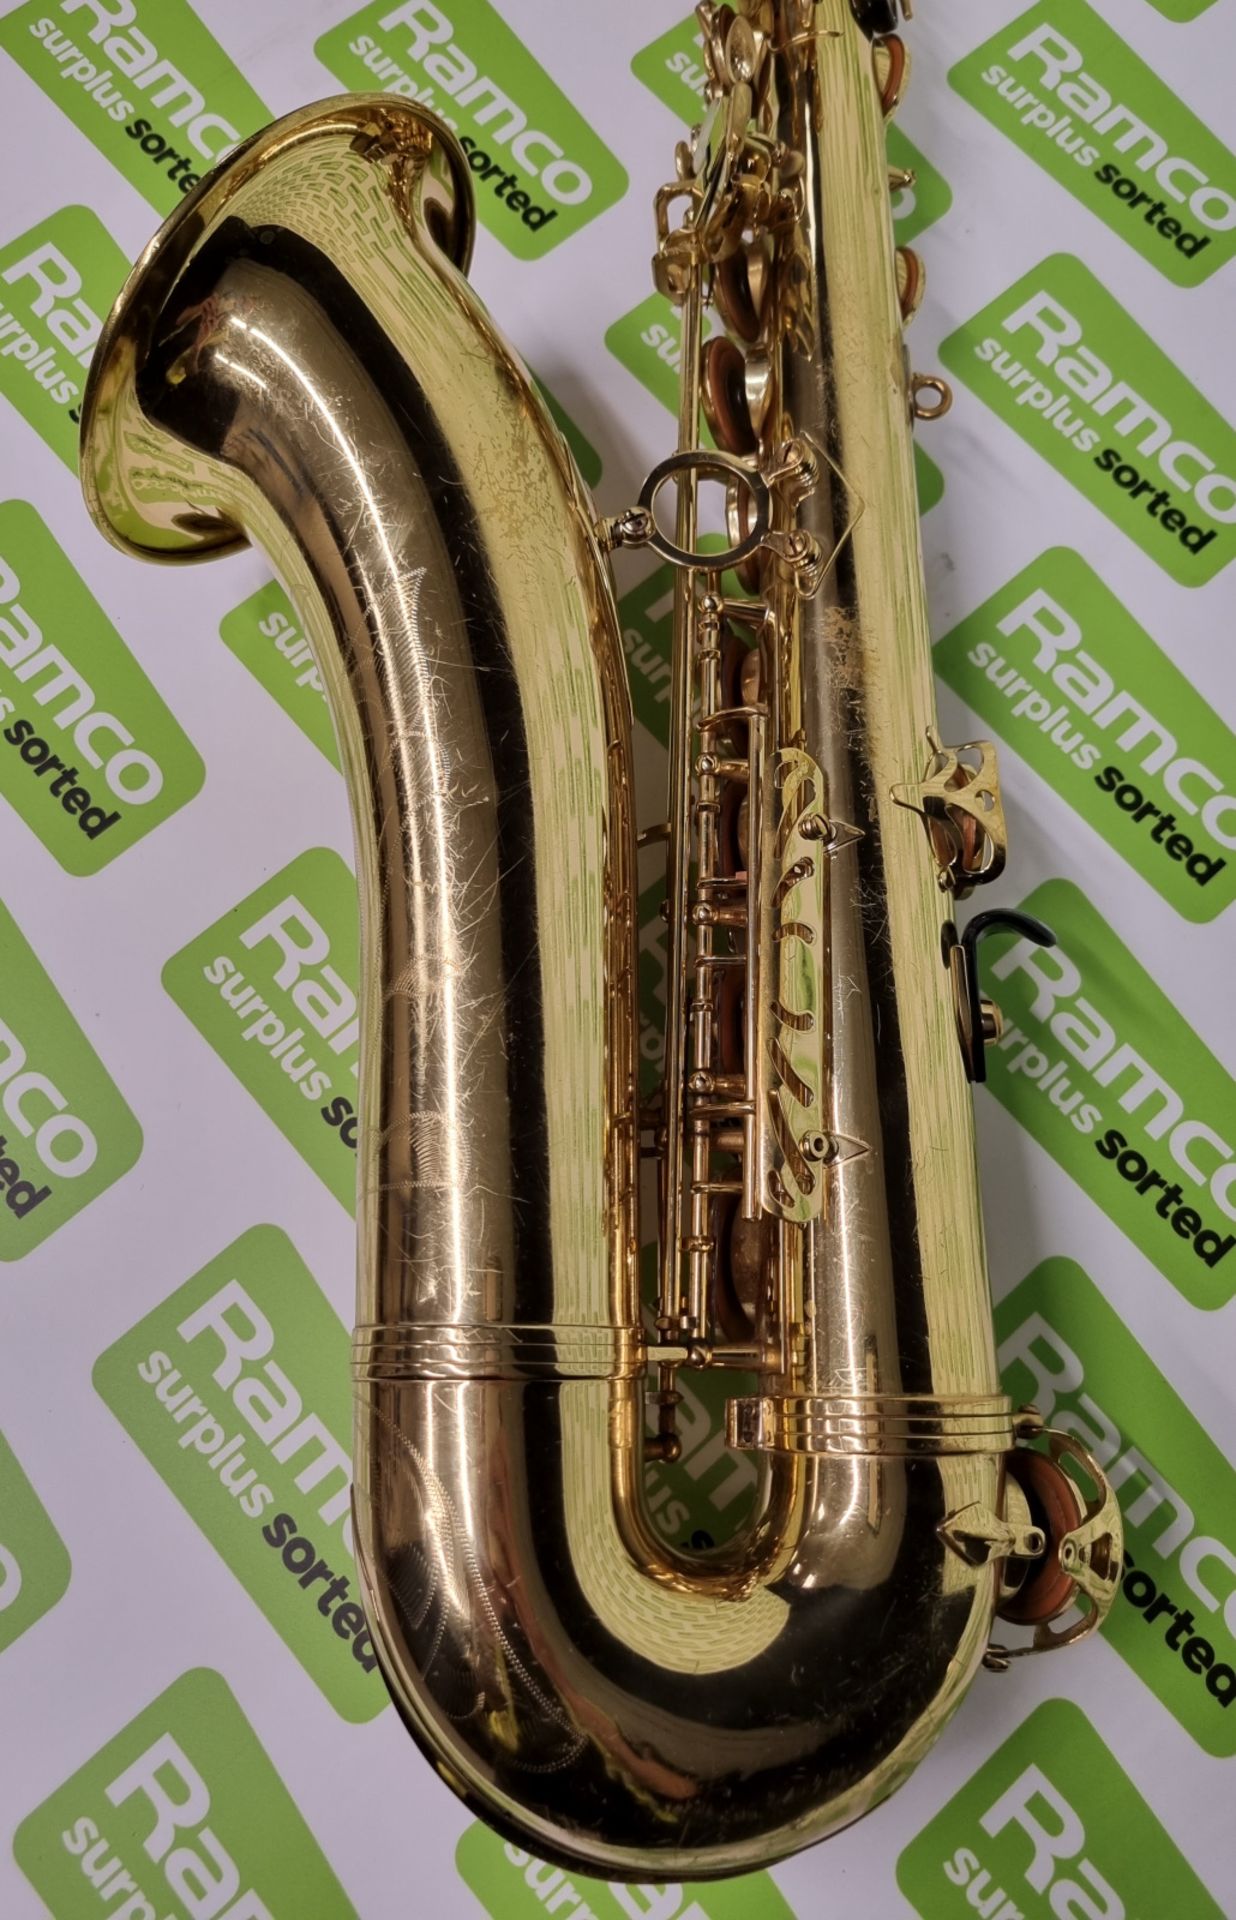 Henri Selmer 80 Super Action Serie ll saxophone in Henri Selmer case - serial number: 702272 - Image 11 of 26